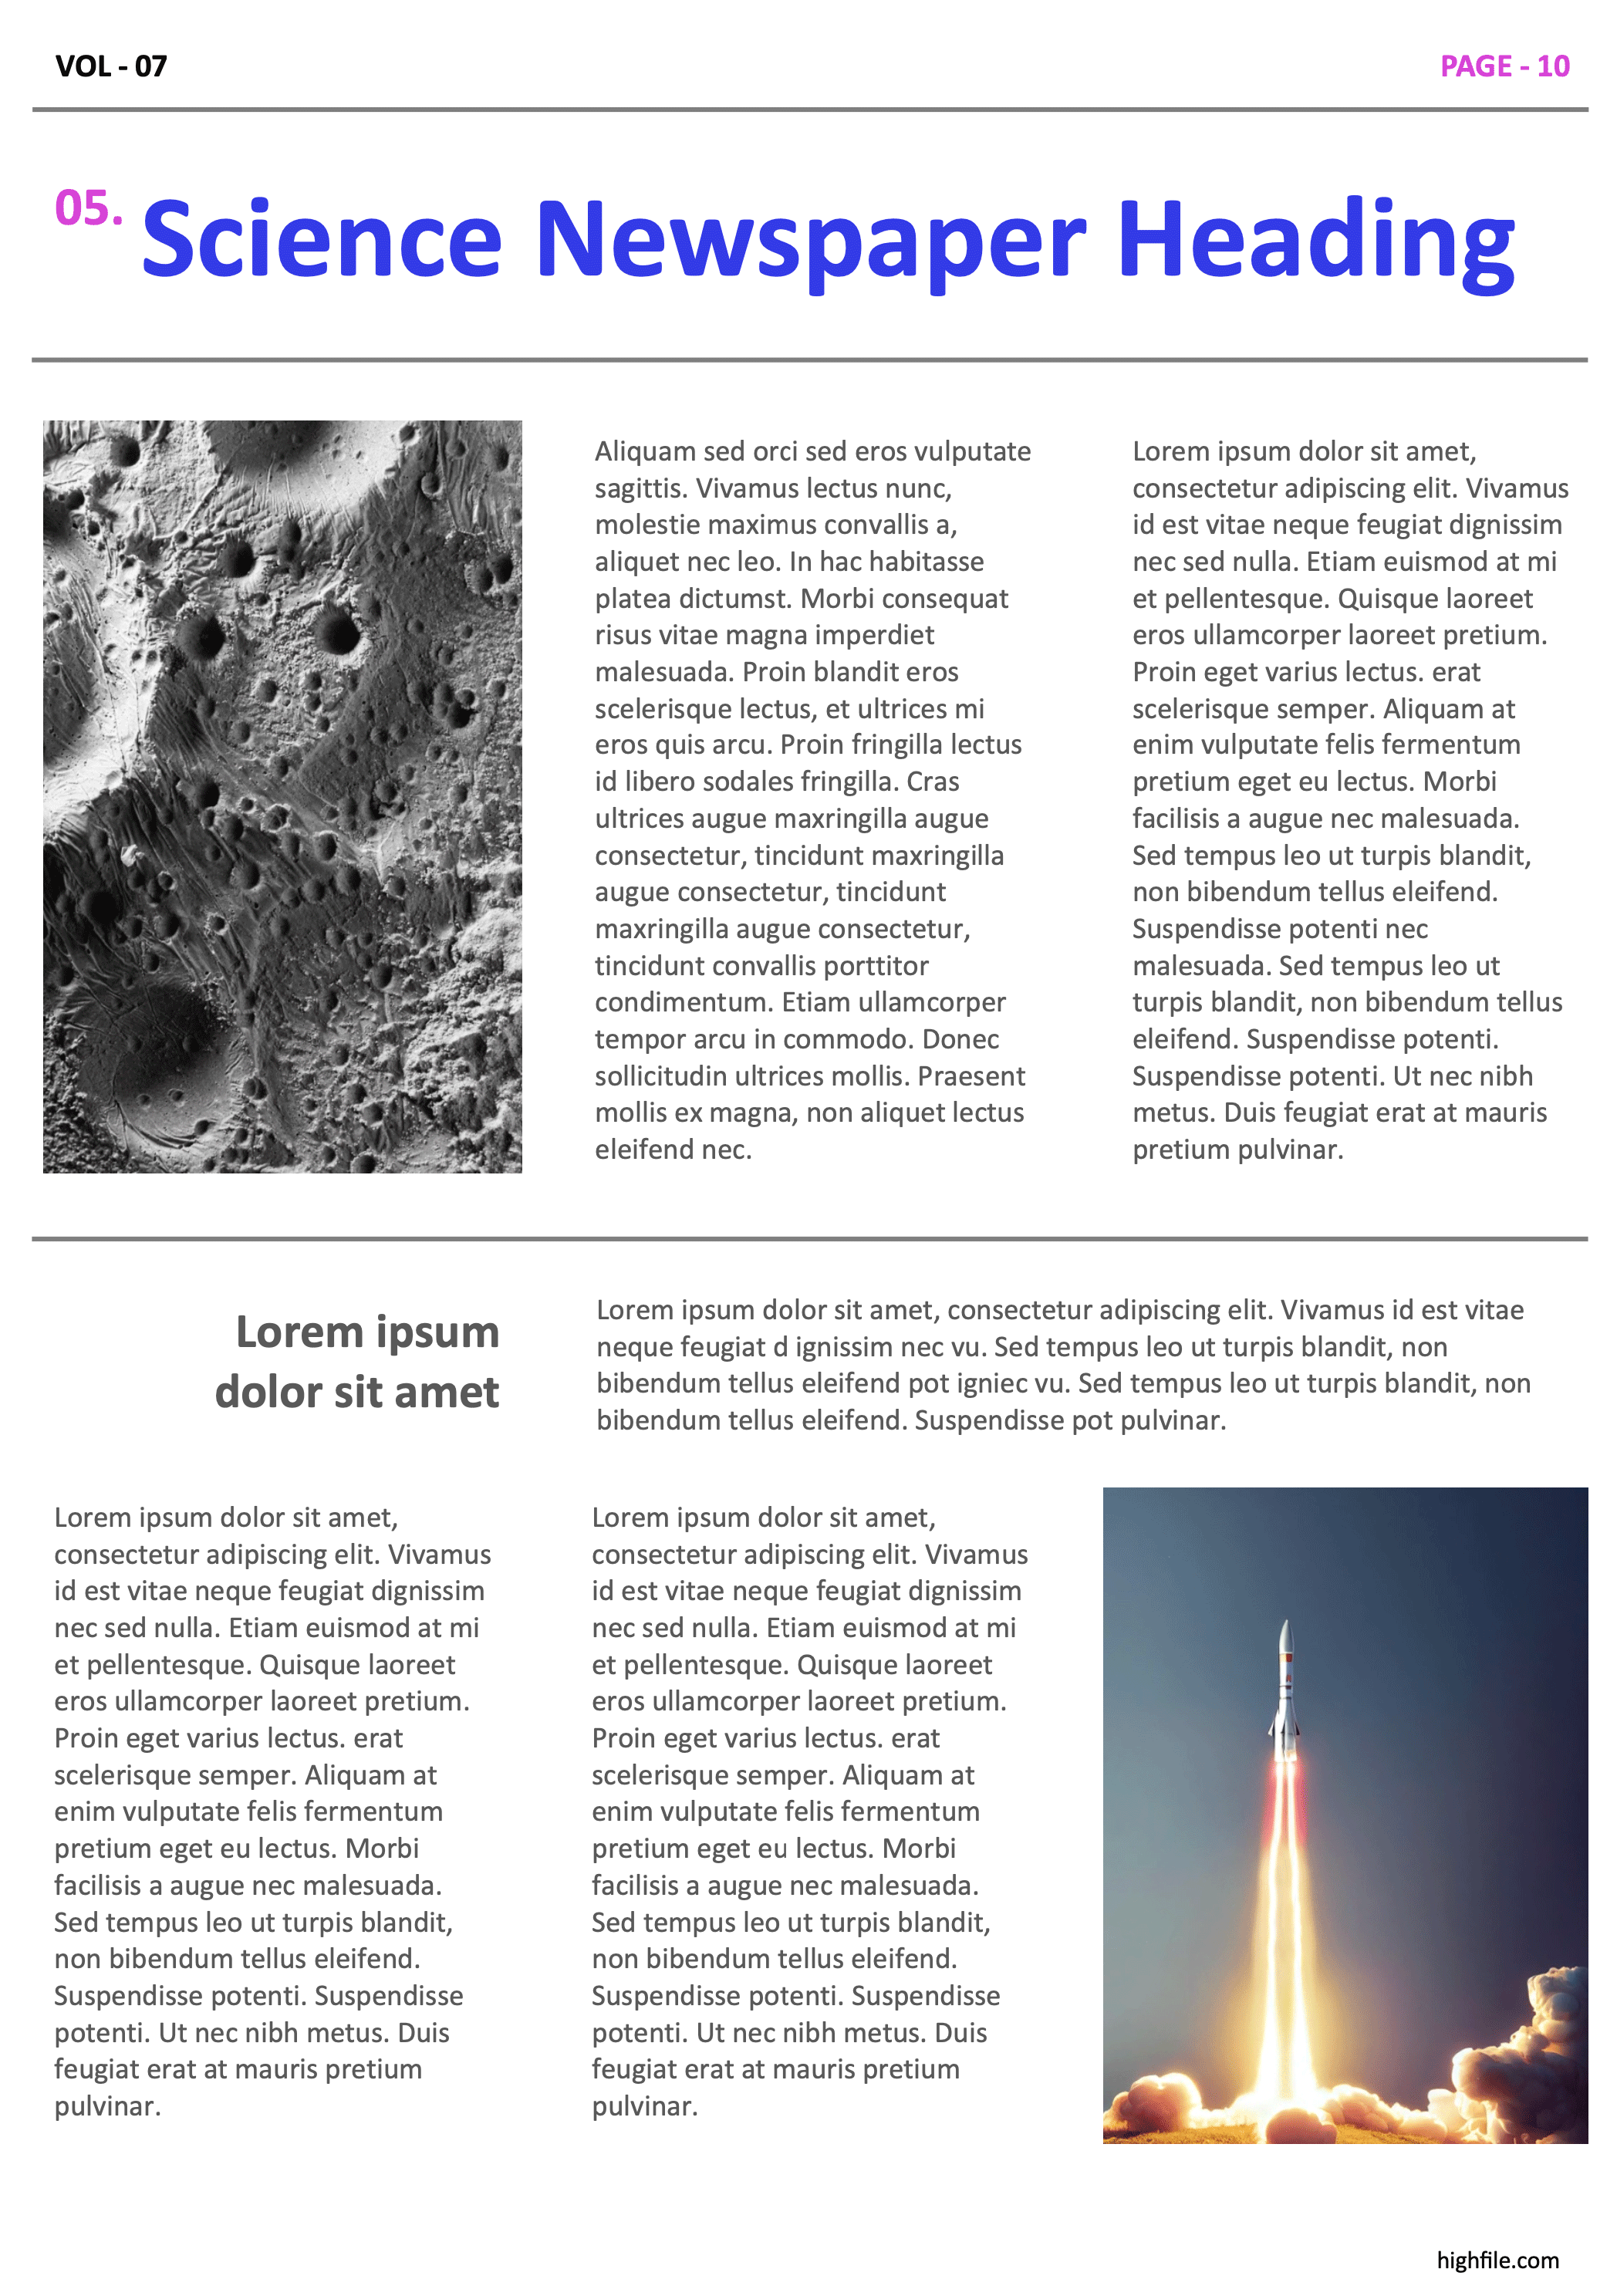 Scientific Newspaper Template - Page 10